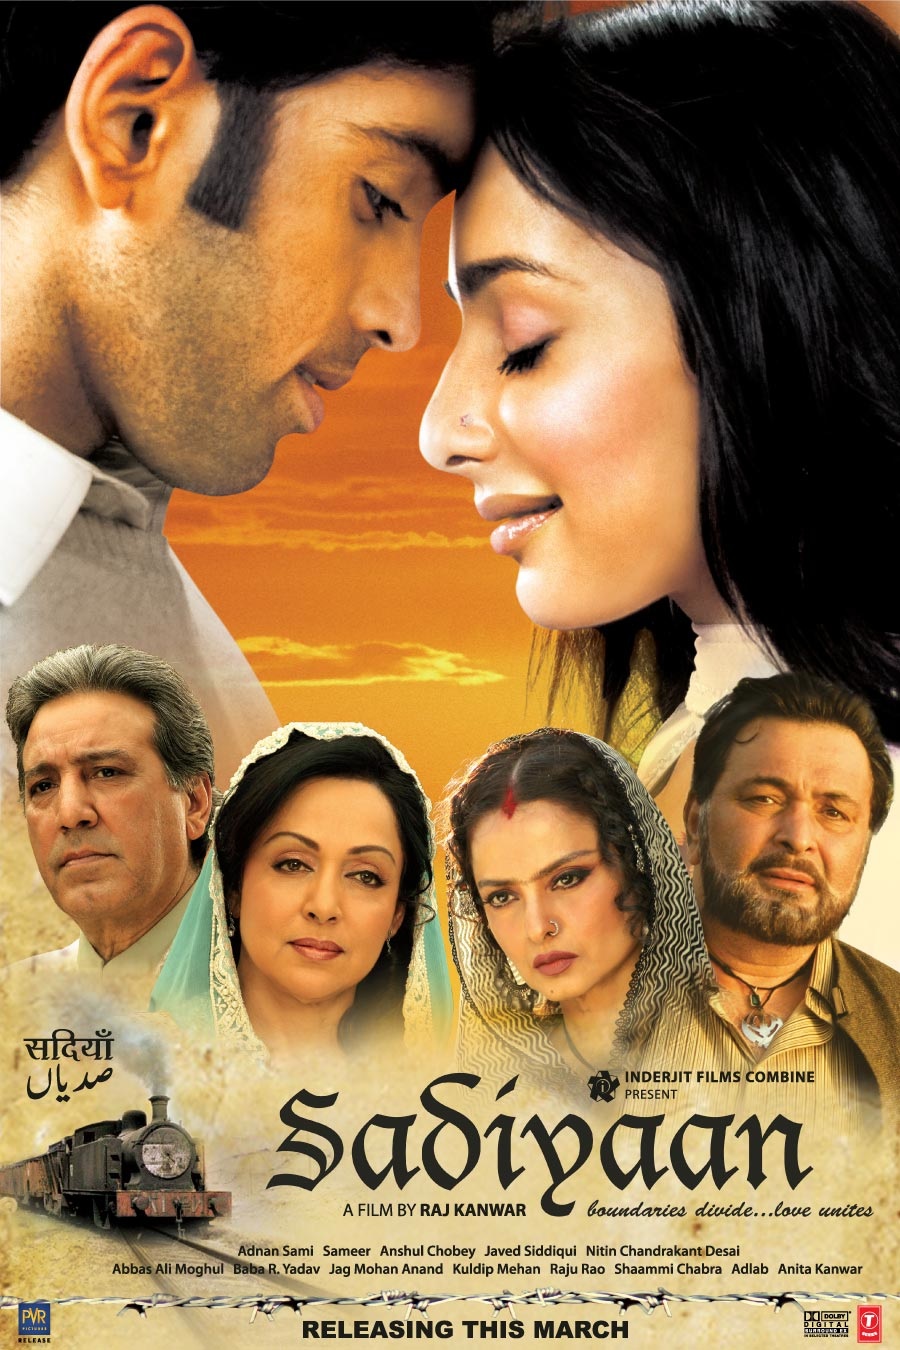 Poster of 'Sadiyaan'